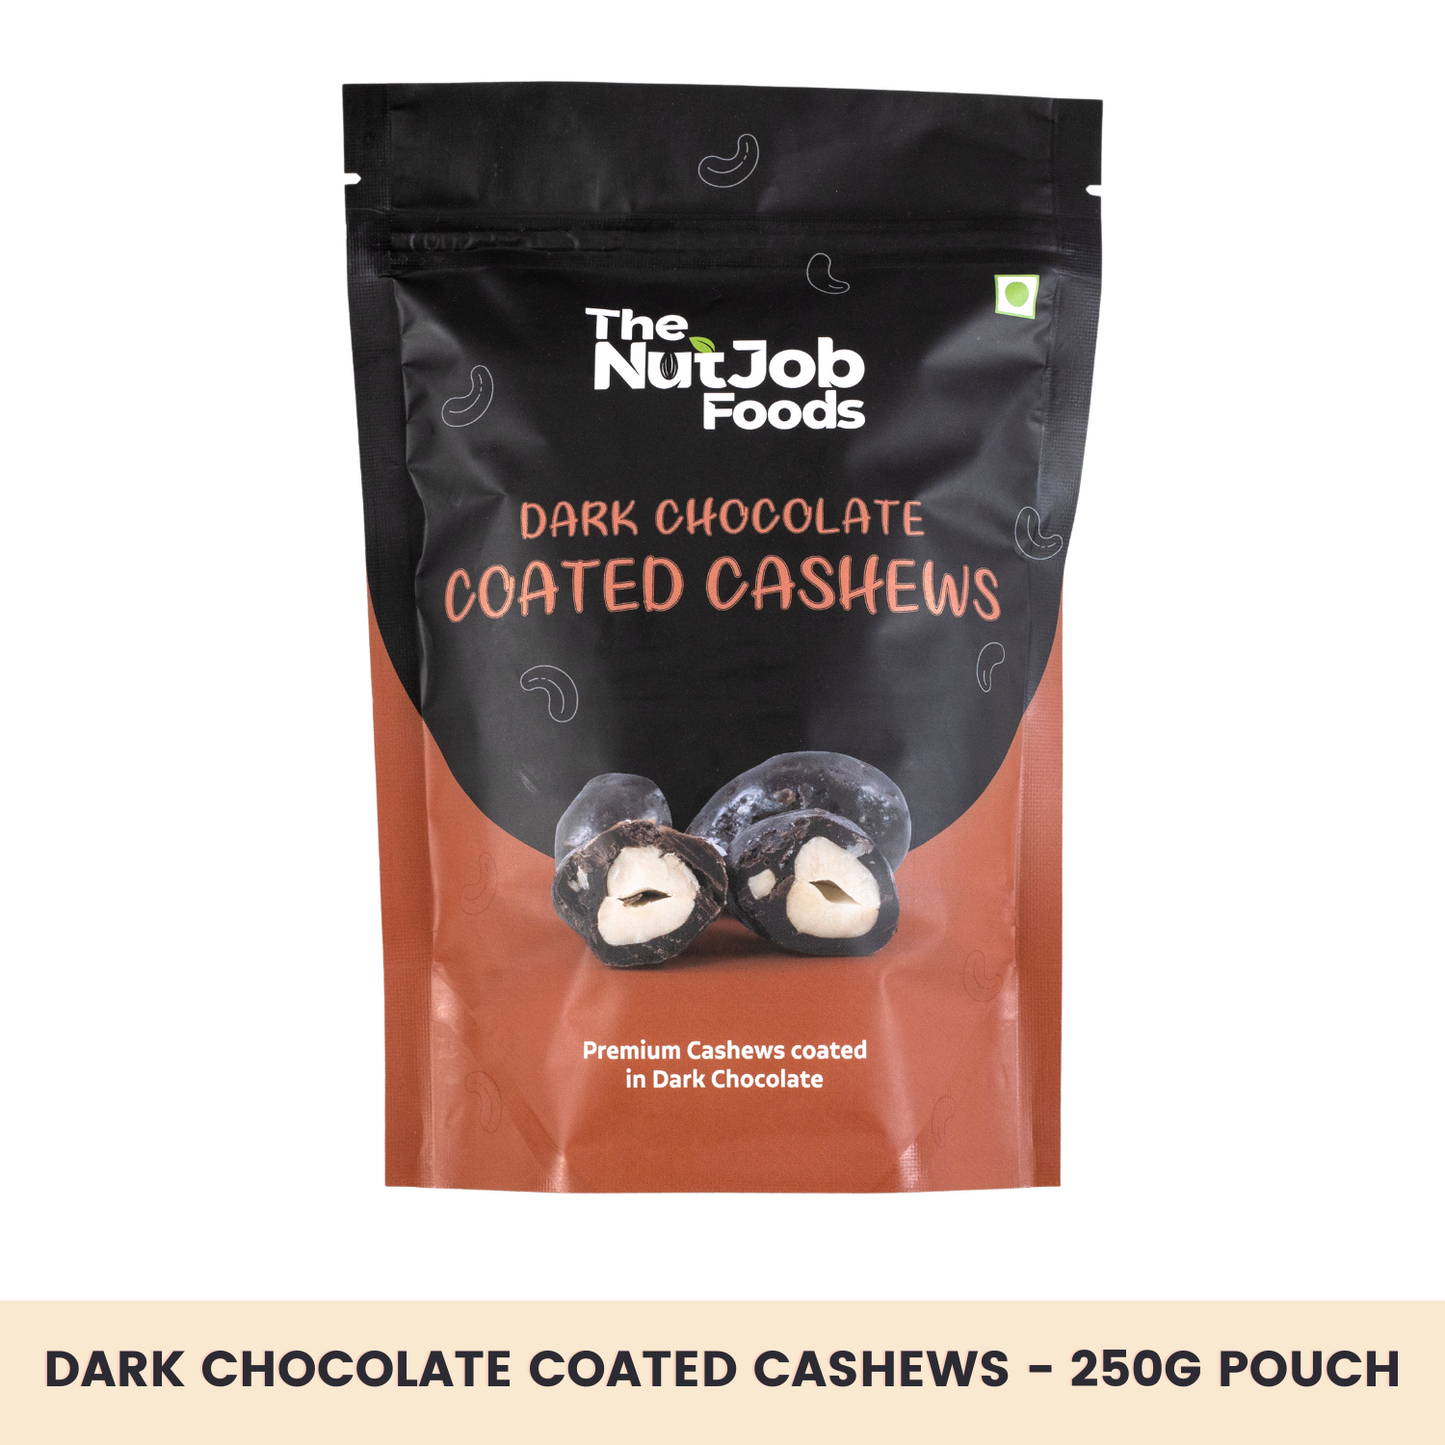 Dark Chocolate Coated Cashews - Premium Cashews coated in Dark Chocolate - 250g Pouch - Protein Source, High Fiber, No Added Preservatives